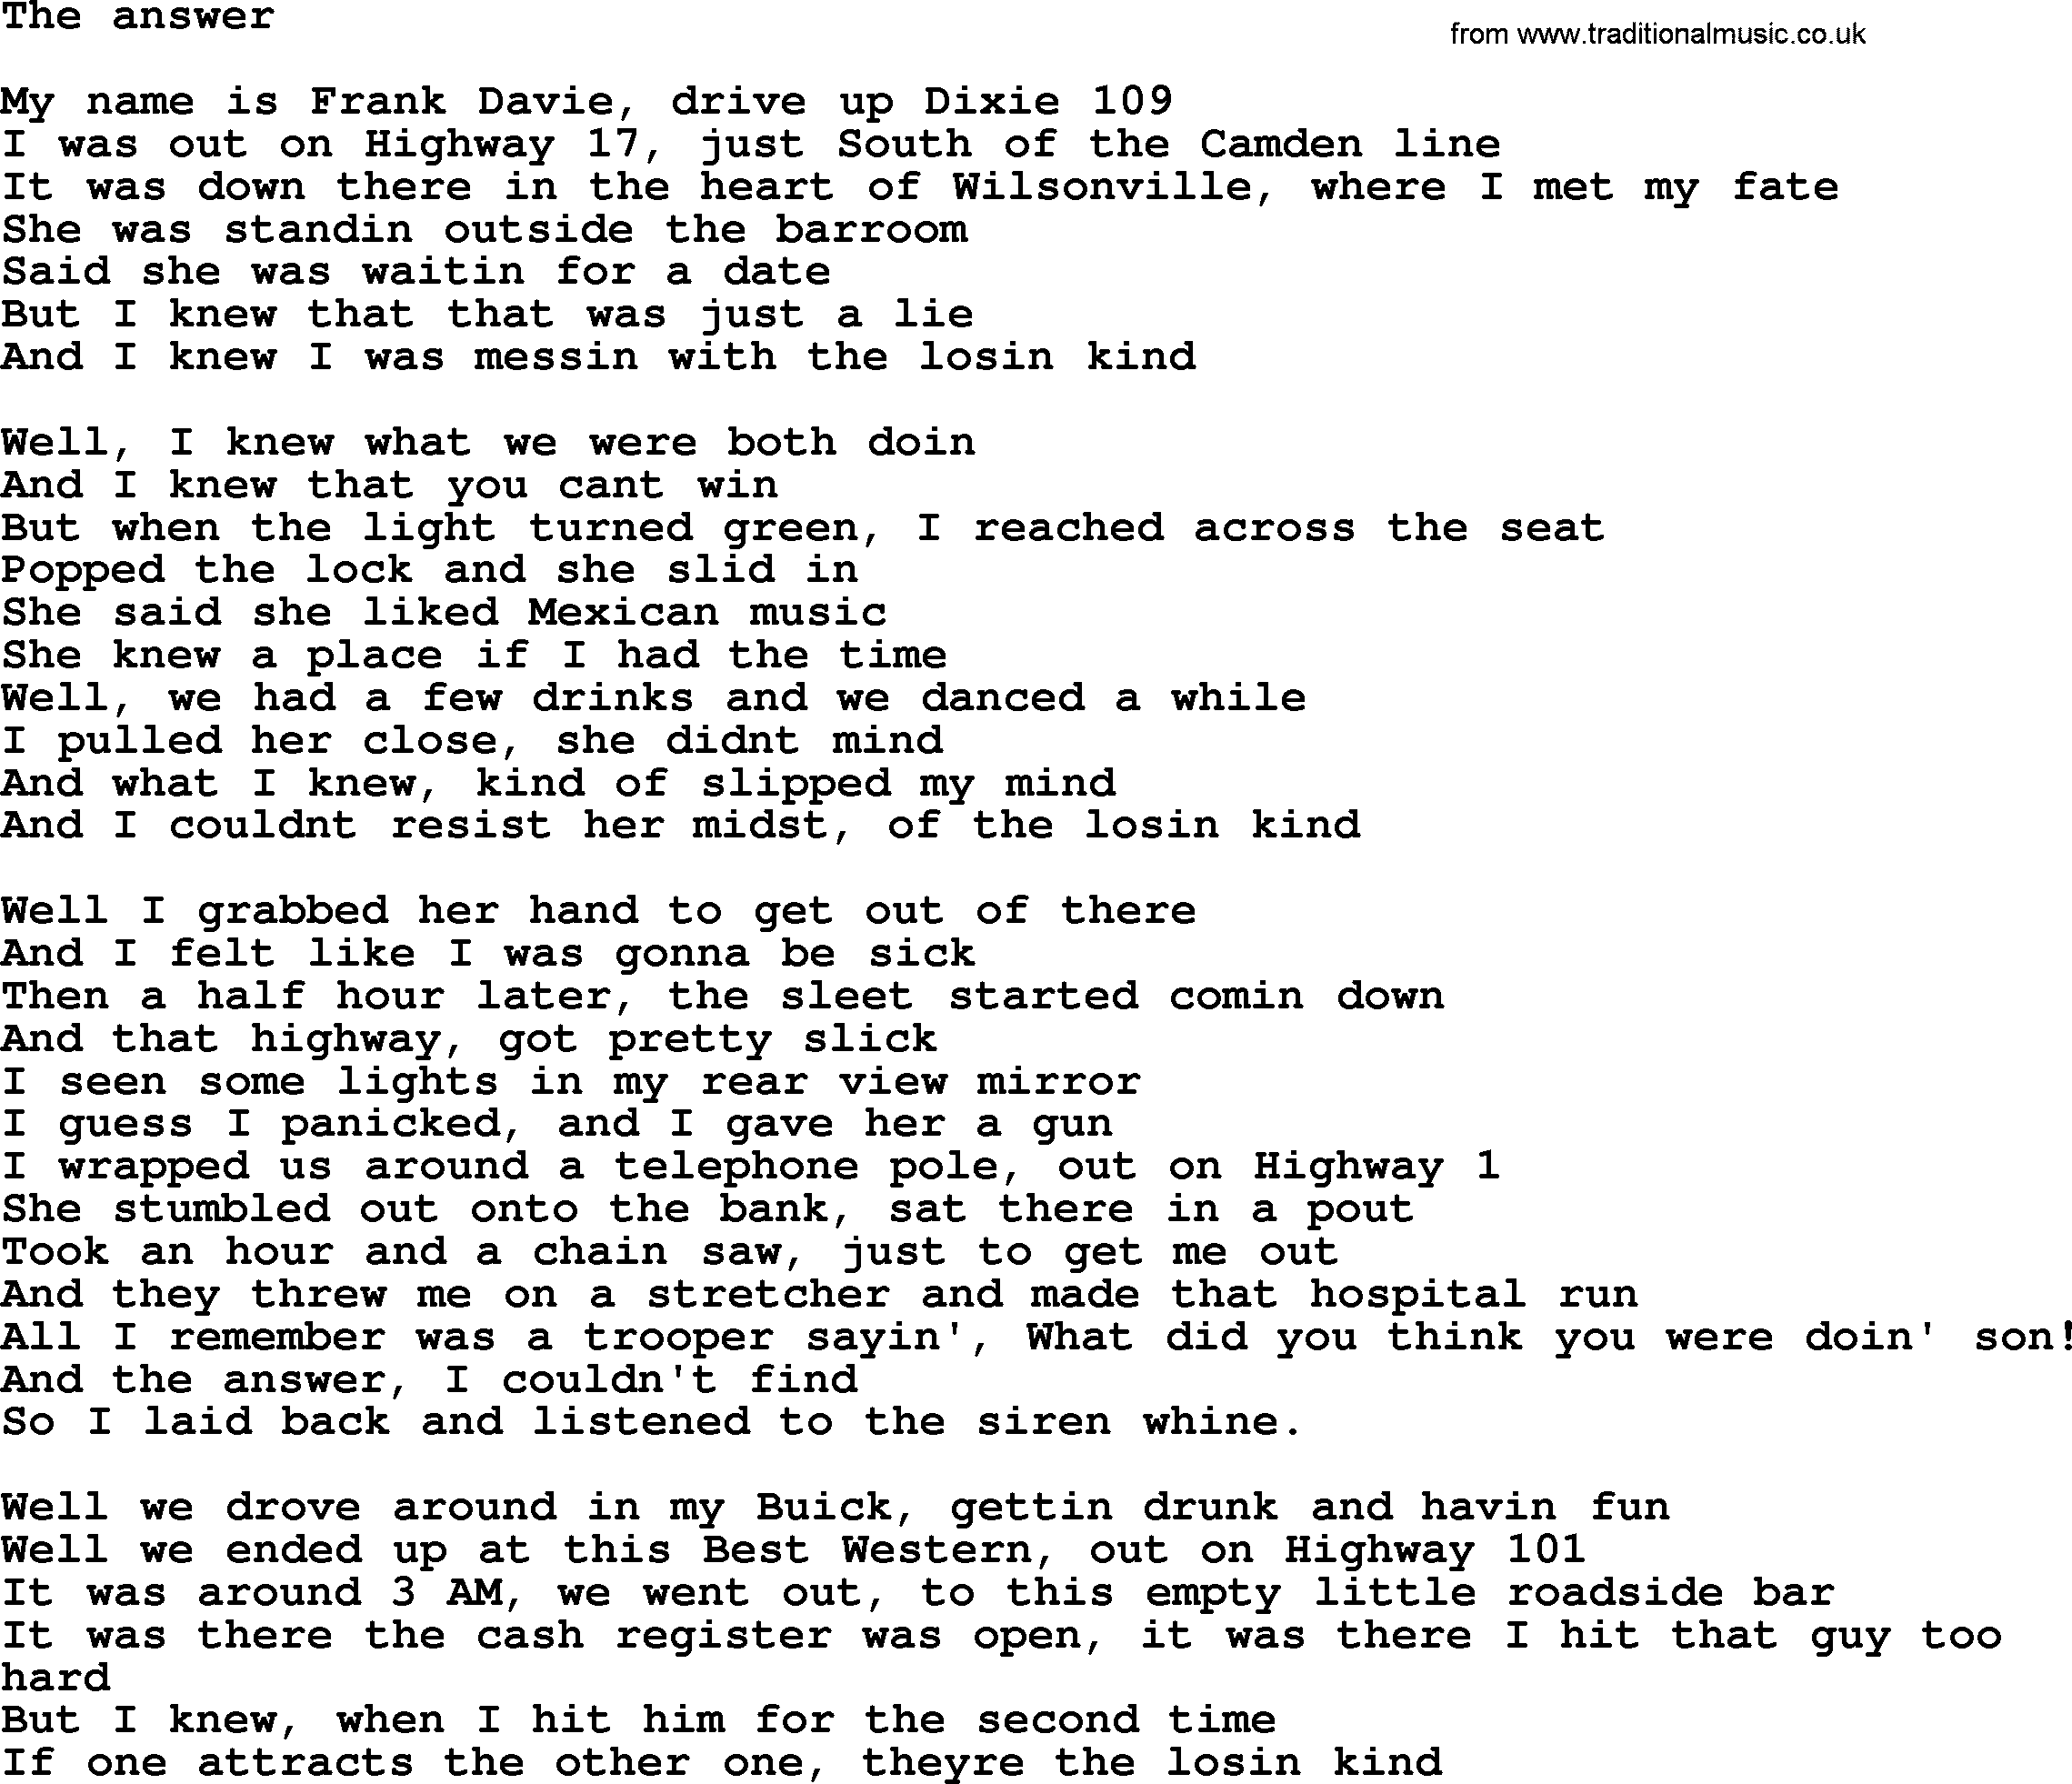 Bruce Springsteen song: The Answer lyrics